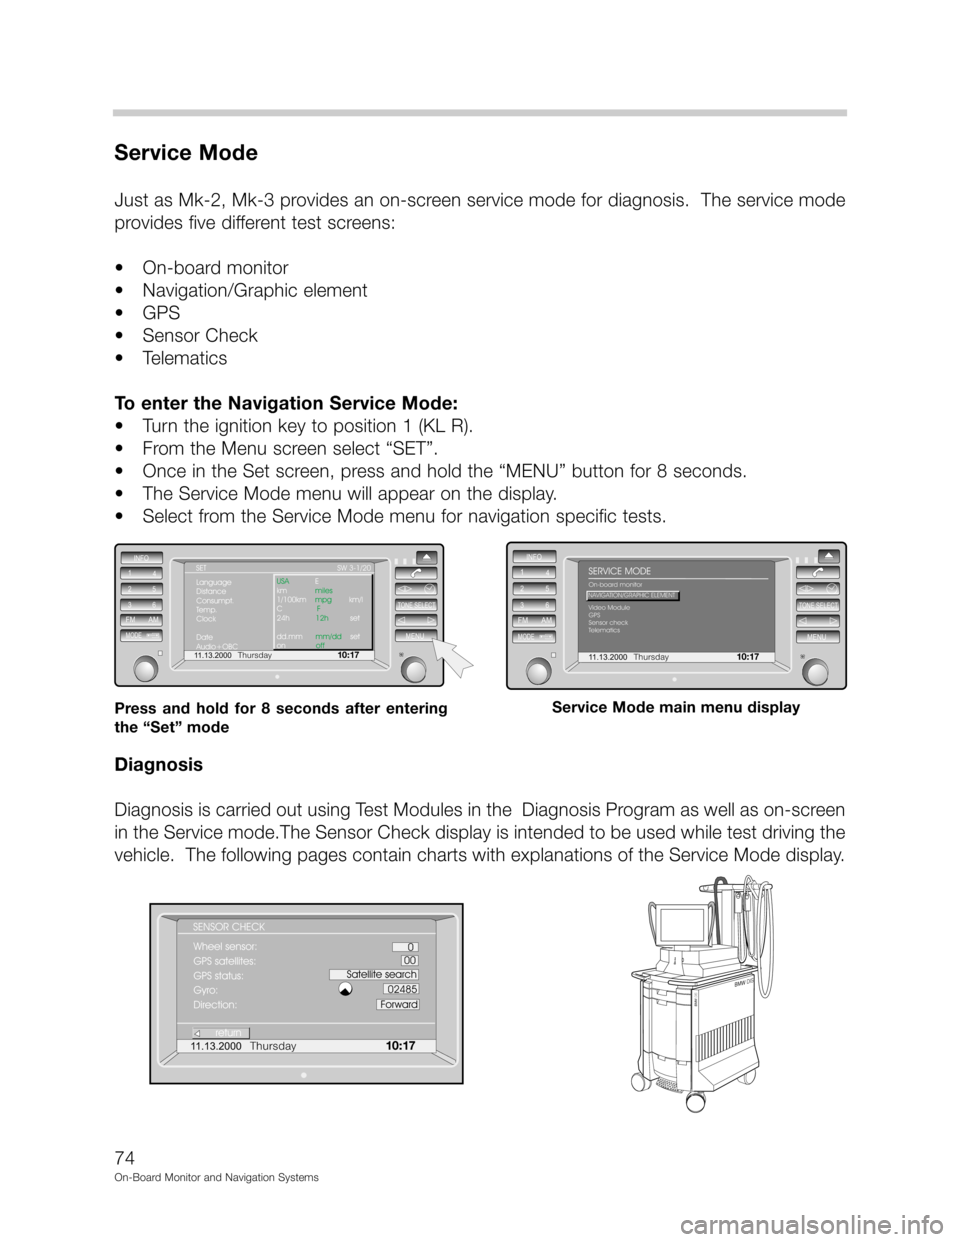 BMW 3 SERIES 2002 E46 On Board Monitor System Manual PDF ,:



"&
(	
, 	
R969.
&


&	
#&	

&&


 
	

